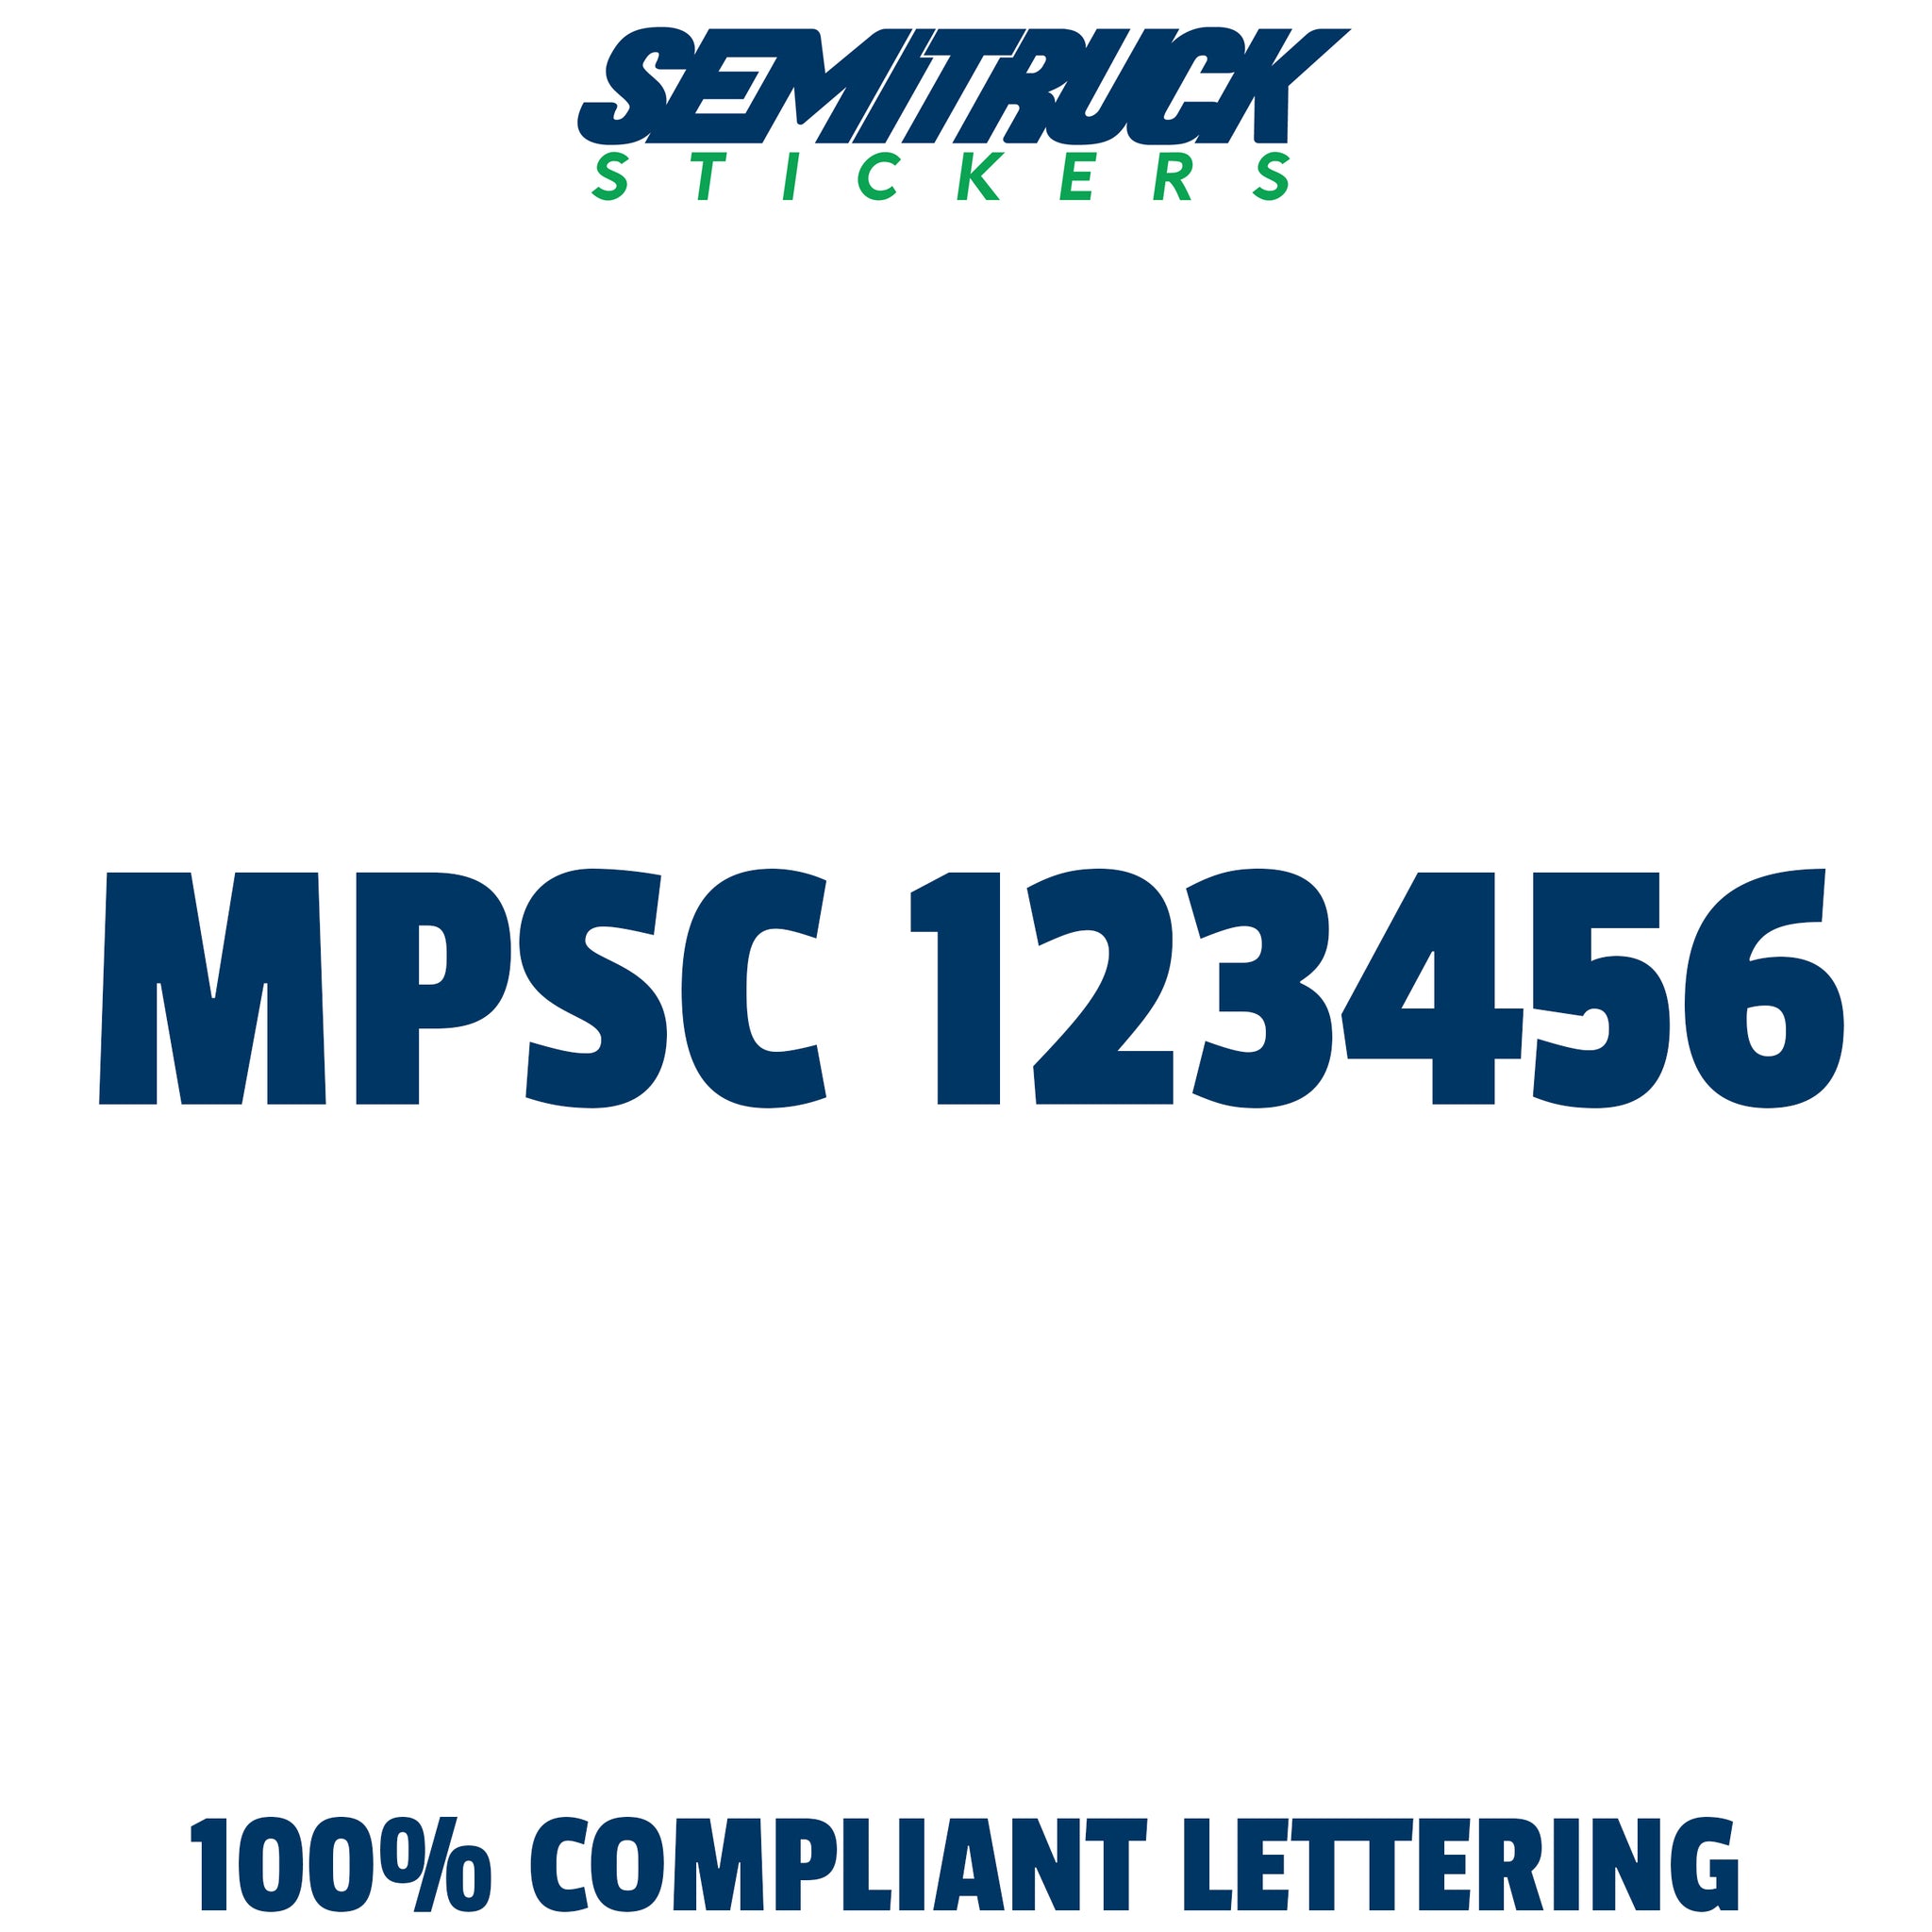 MPSC number sticker